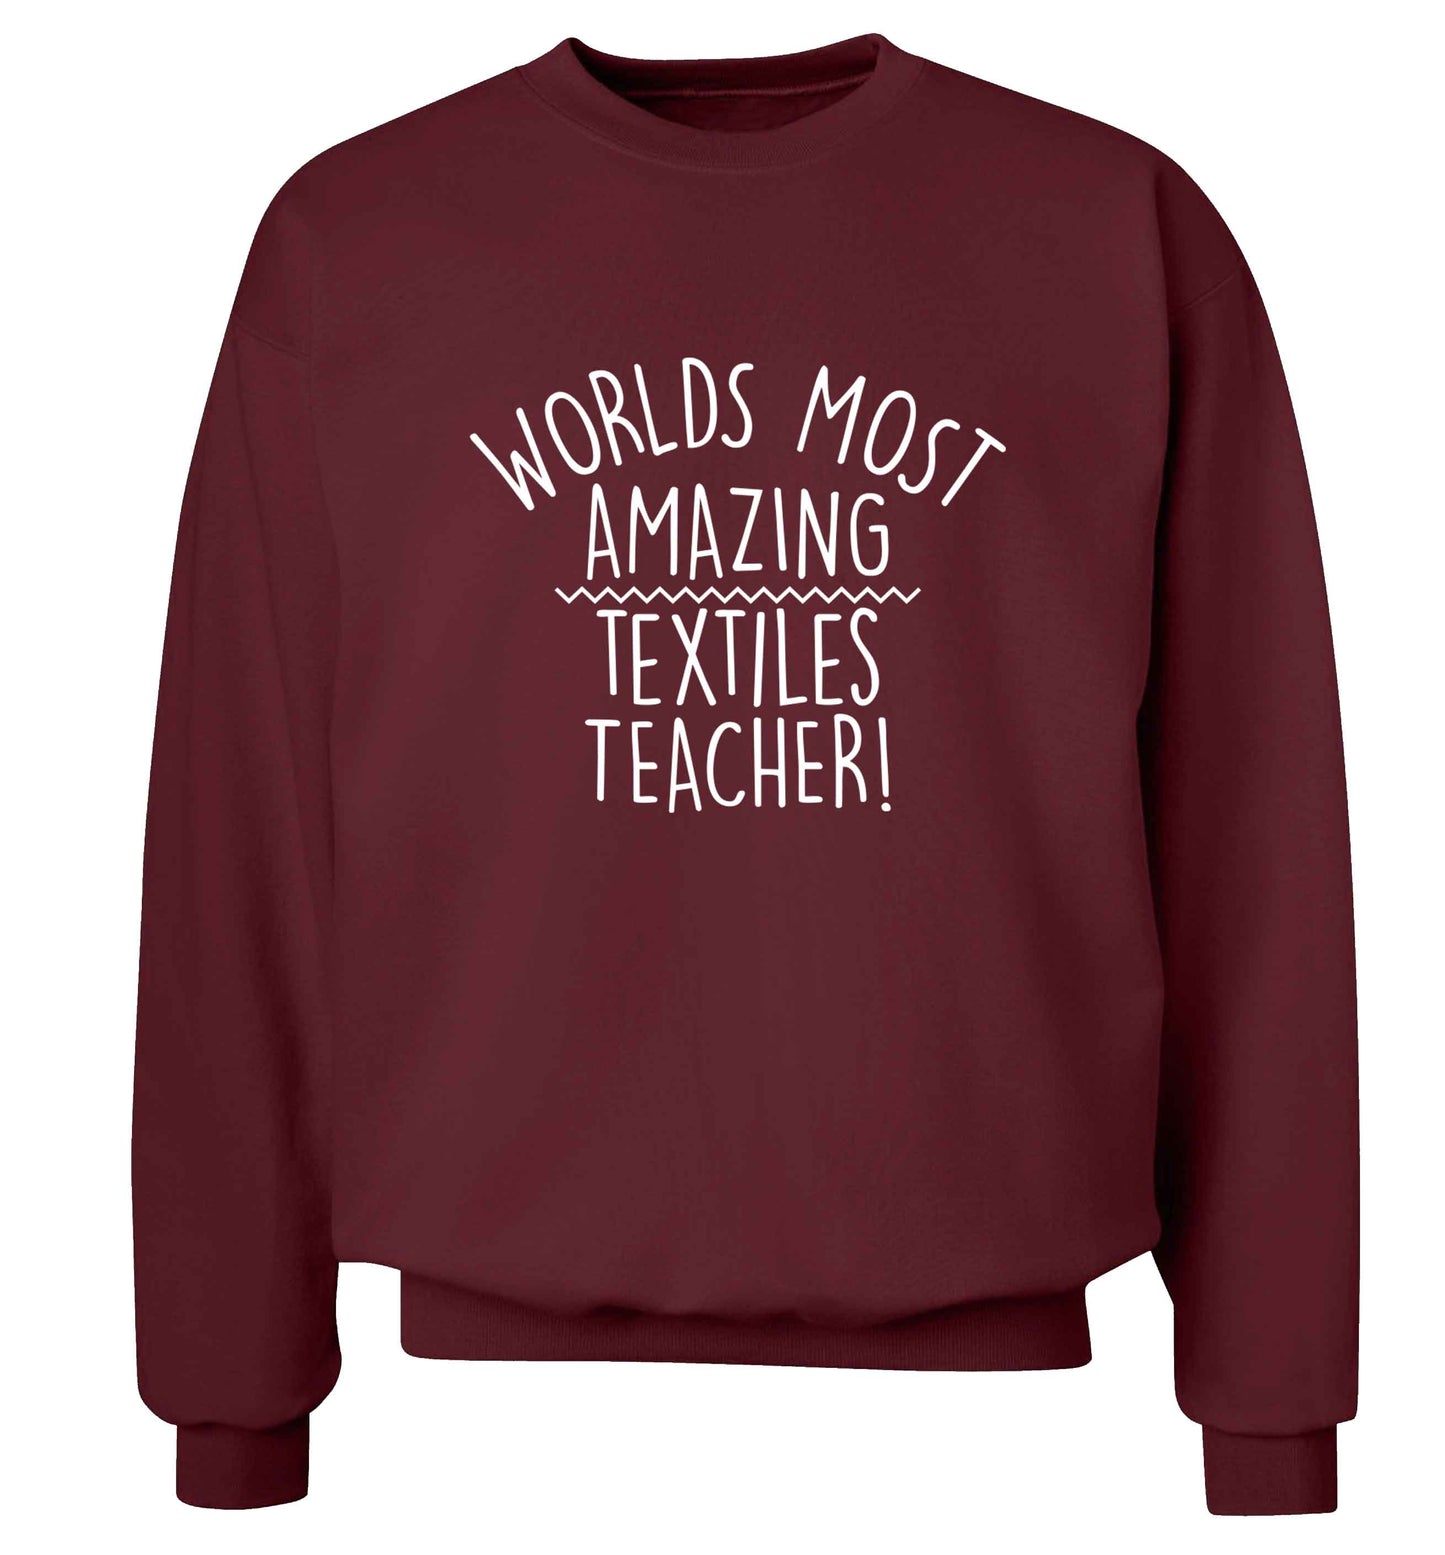 Worlds most amazing textiles teacher adult's unisex maroon sweater 2XL